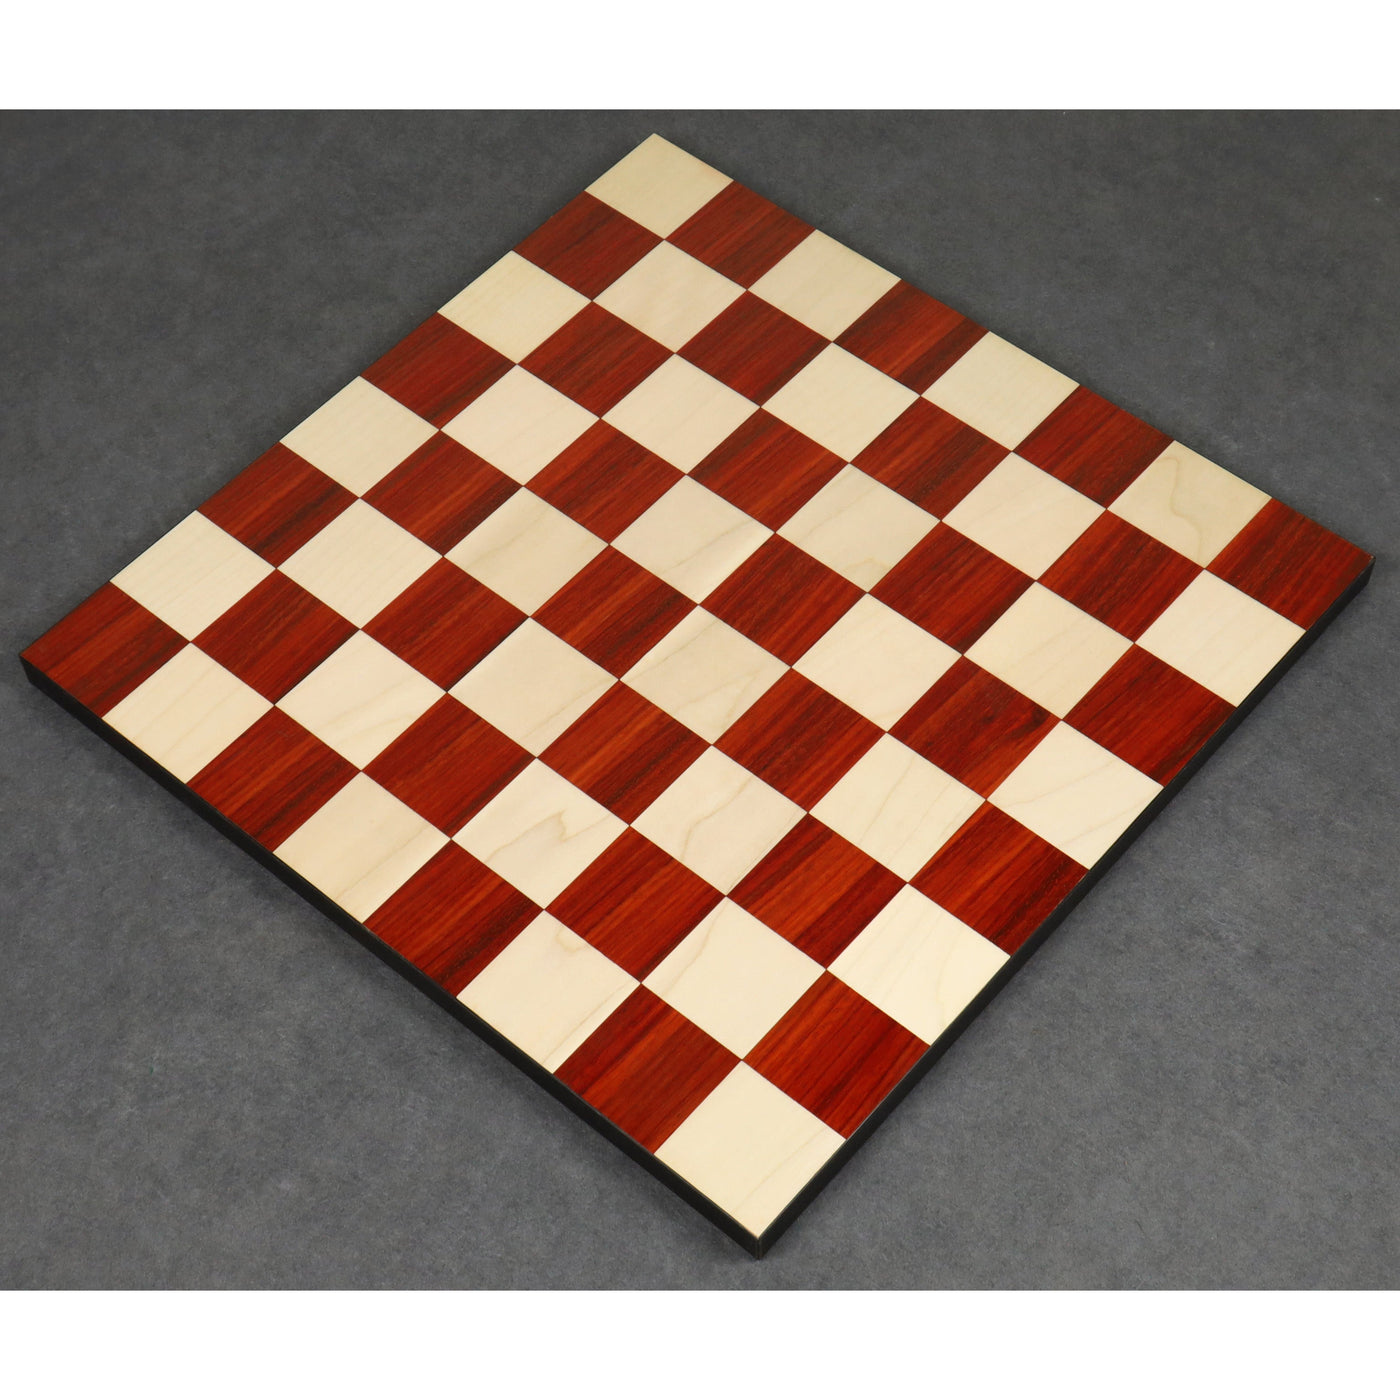 4" Sleek Staunton Luxury Chess Bud Rose Wood Pieces with 17.7" Borderless Bud Rosewood & Maple Wood Chess board and Golden Rosewood Chess Pieces Storage Box